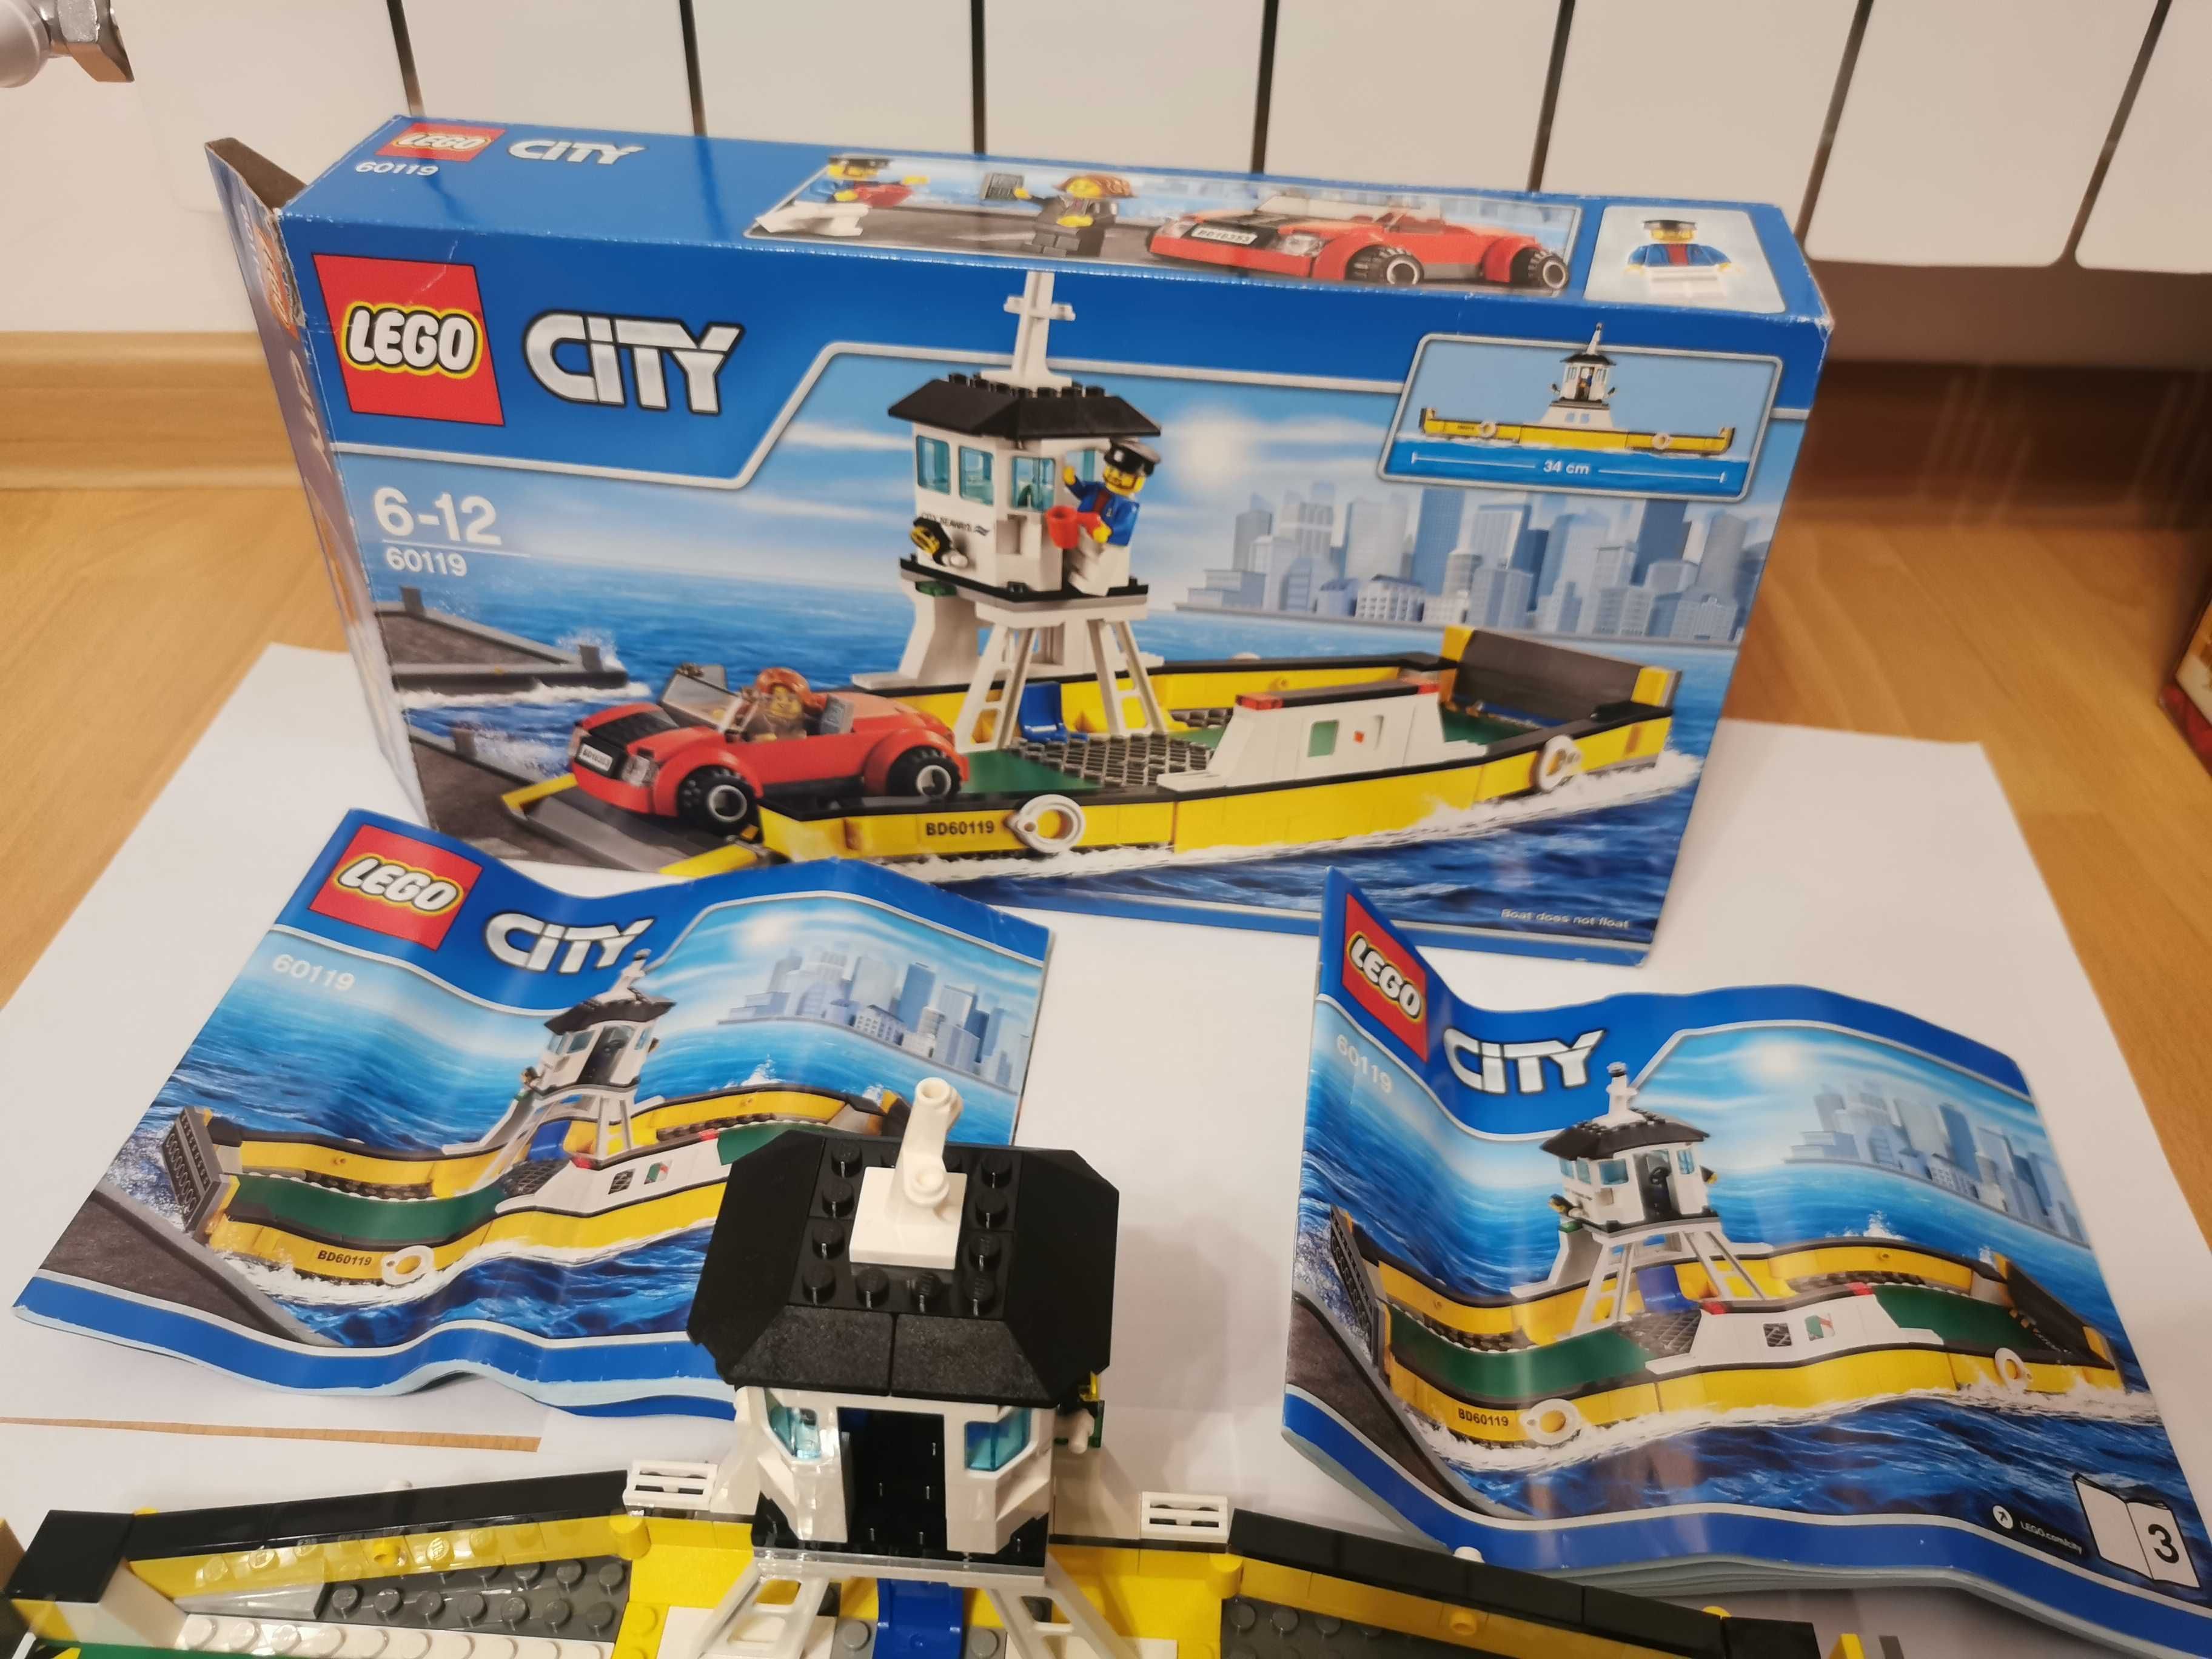 Vand Lego City 60119 in stare impecabila